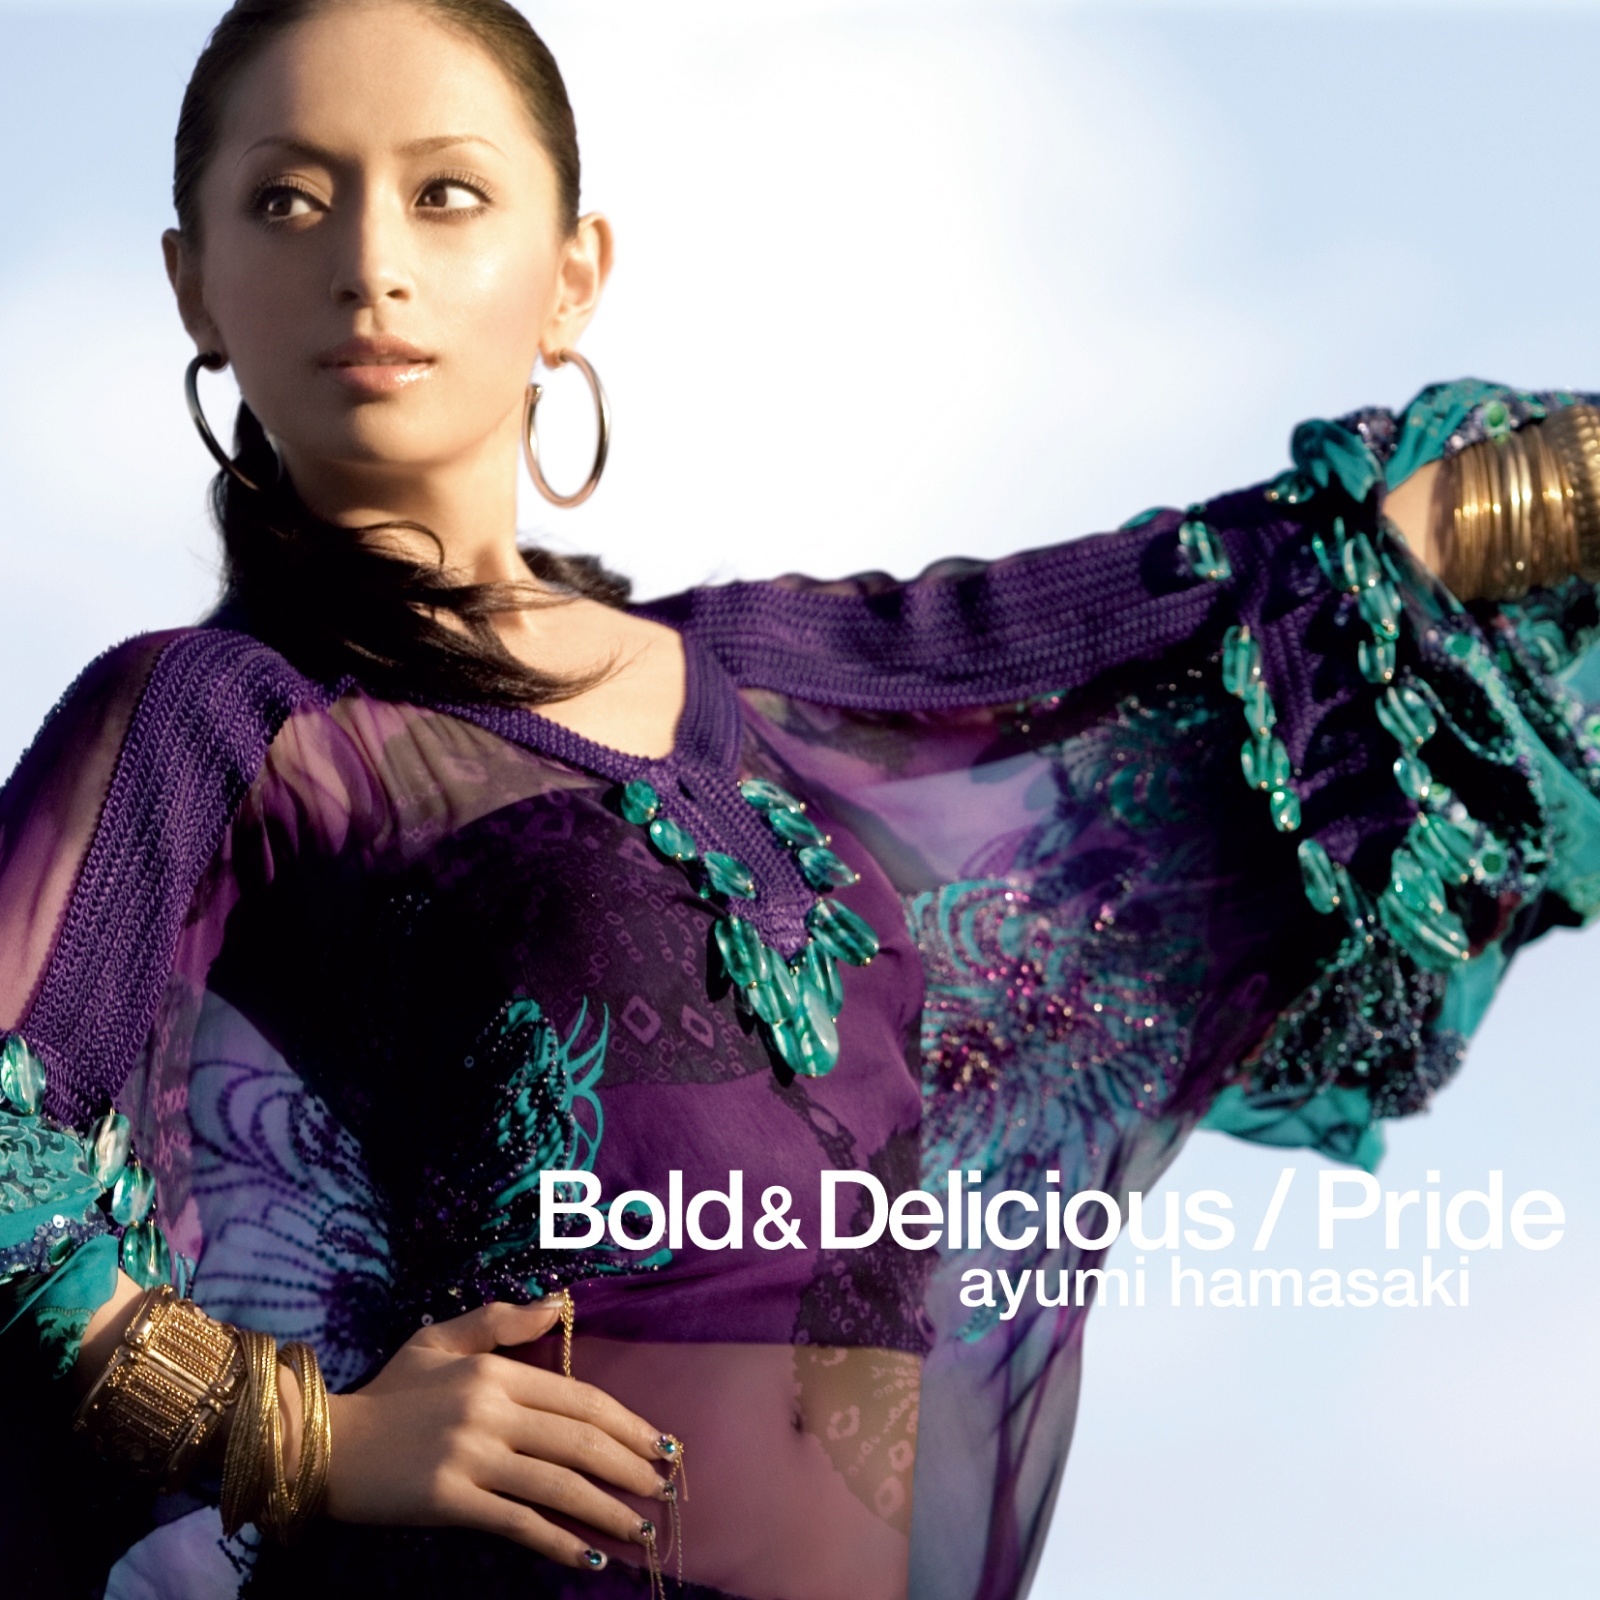 Bold & Delicious/Pride